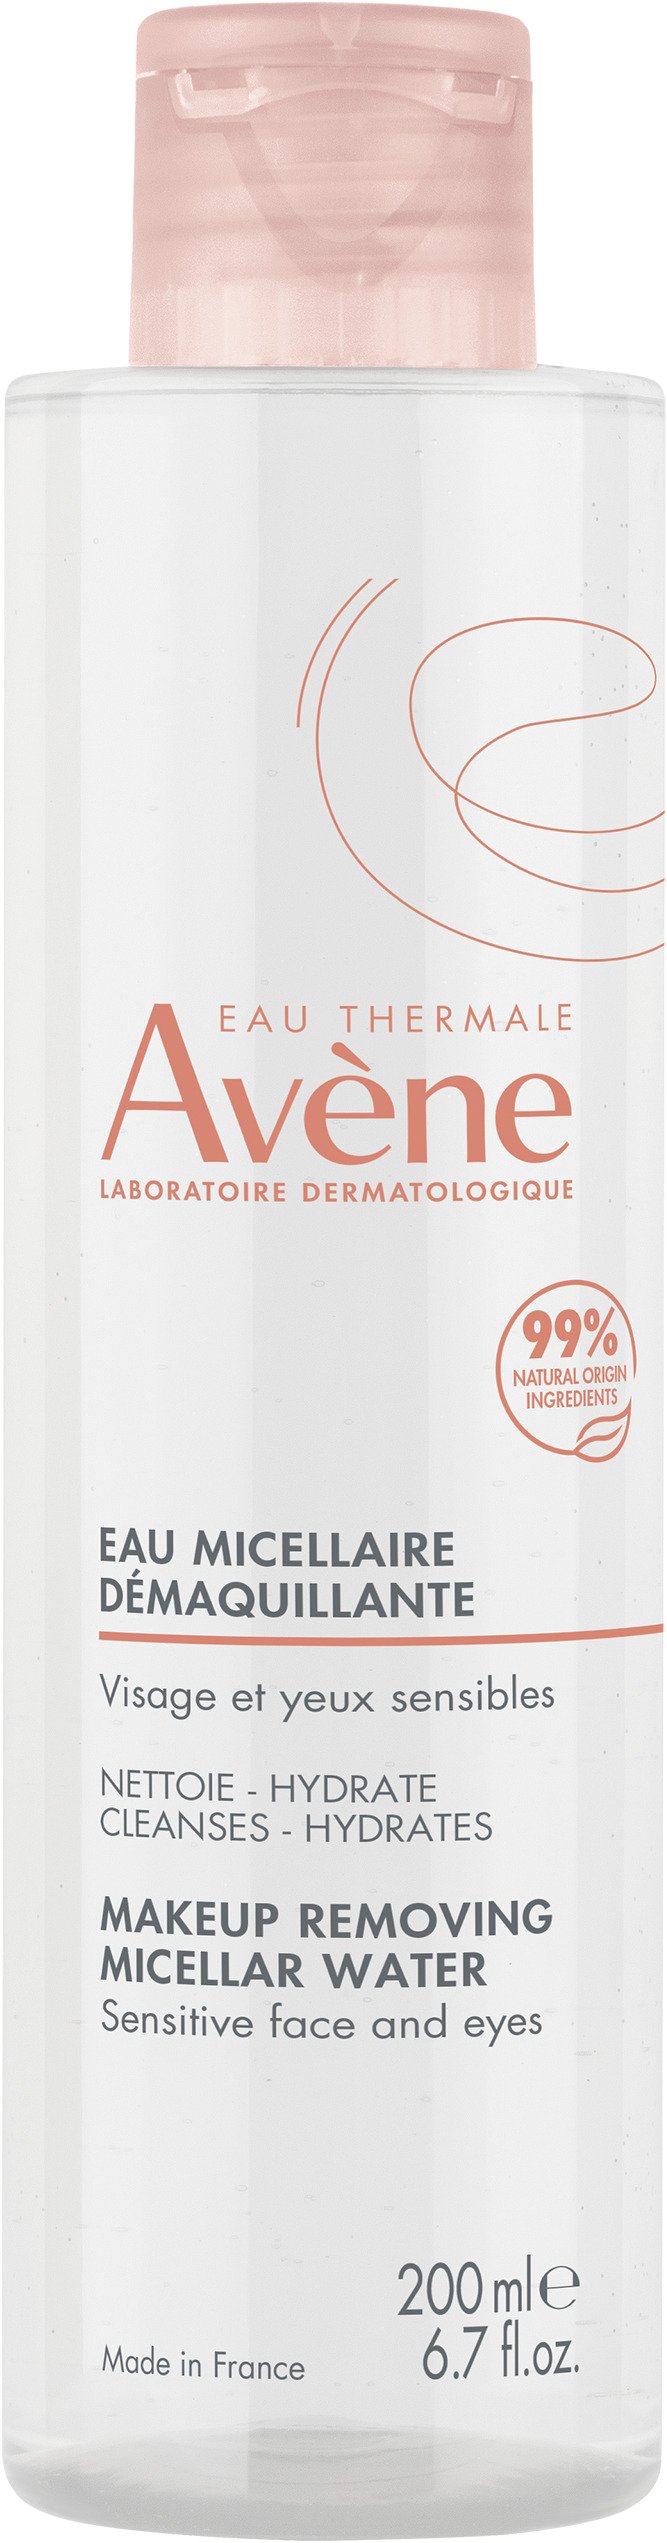 Avene Make Up Remover Micellar Water, 200 ml